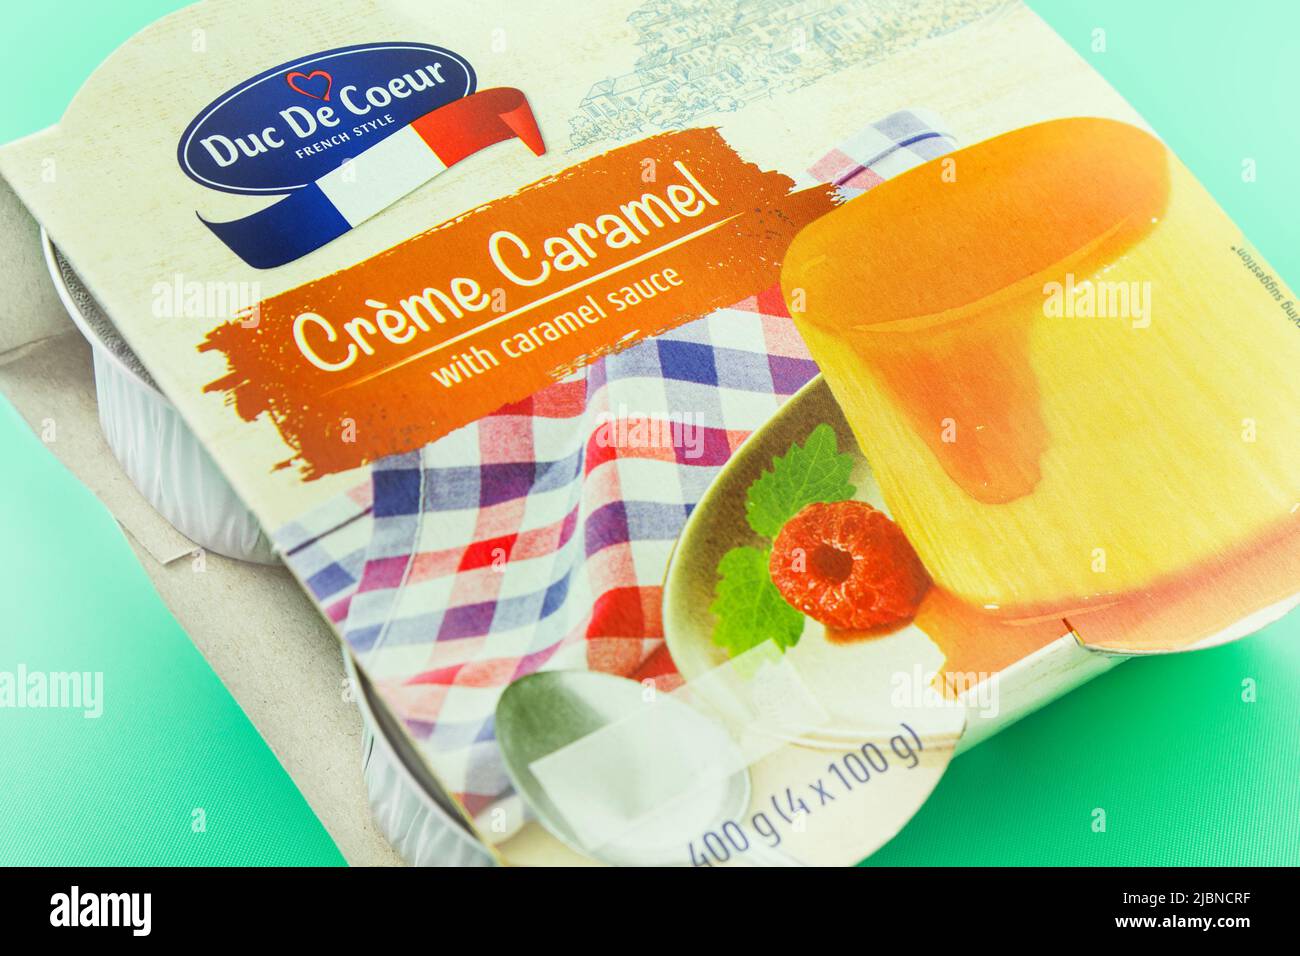 Creme Stock Caramel Duc Photo de Coeur - Alamy 4